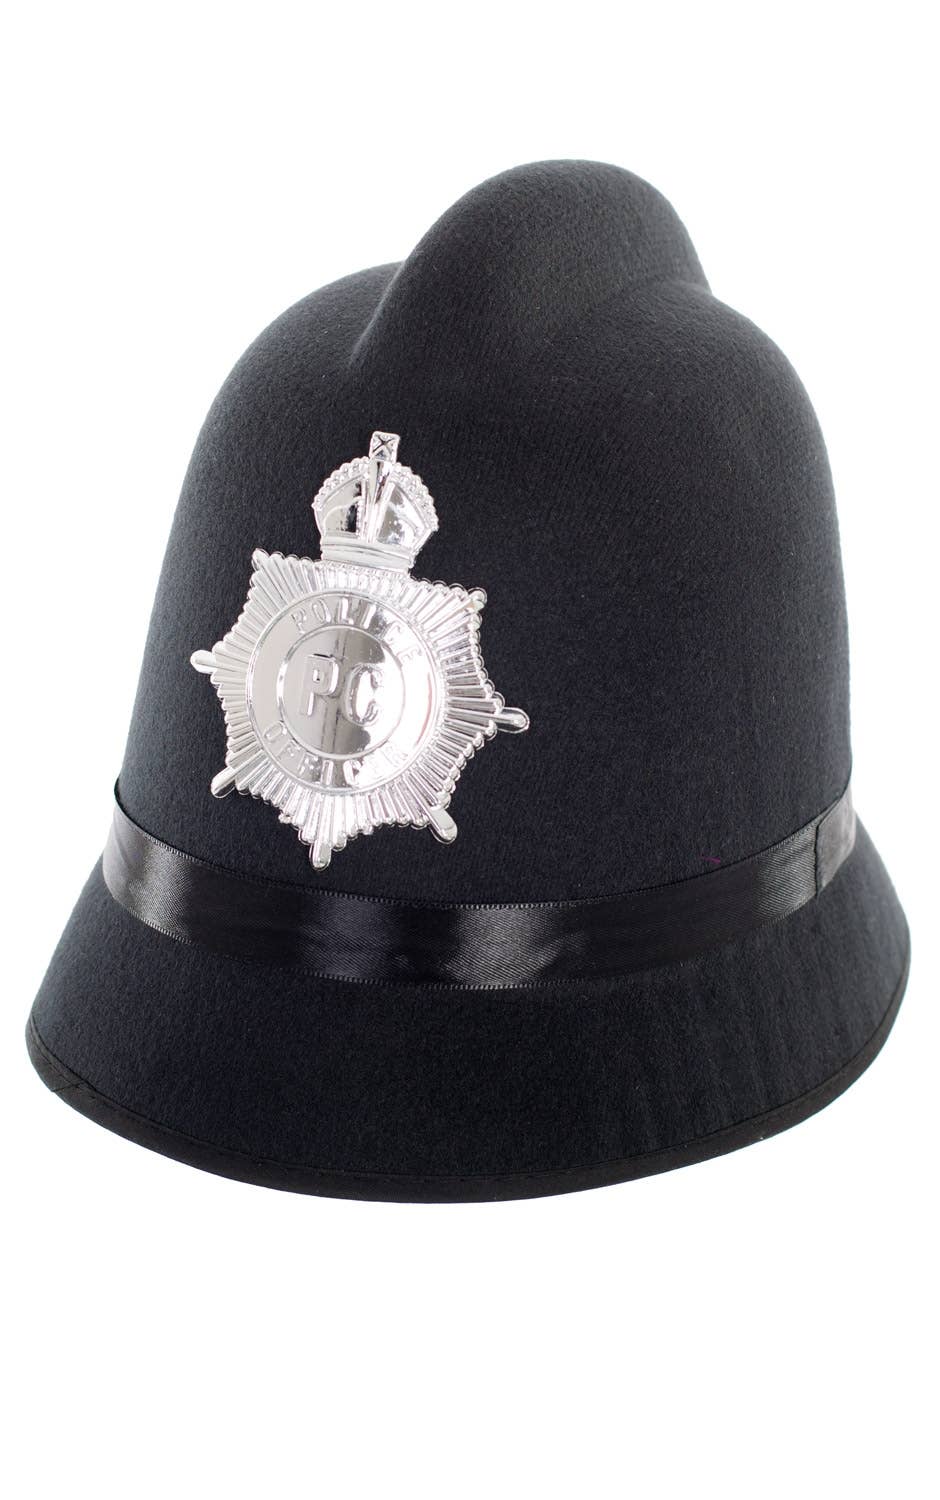 Black London Bobby Policeman Costume Hat Main Image